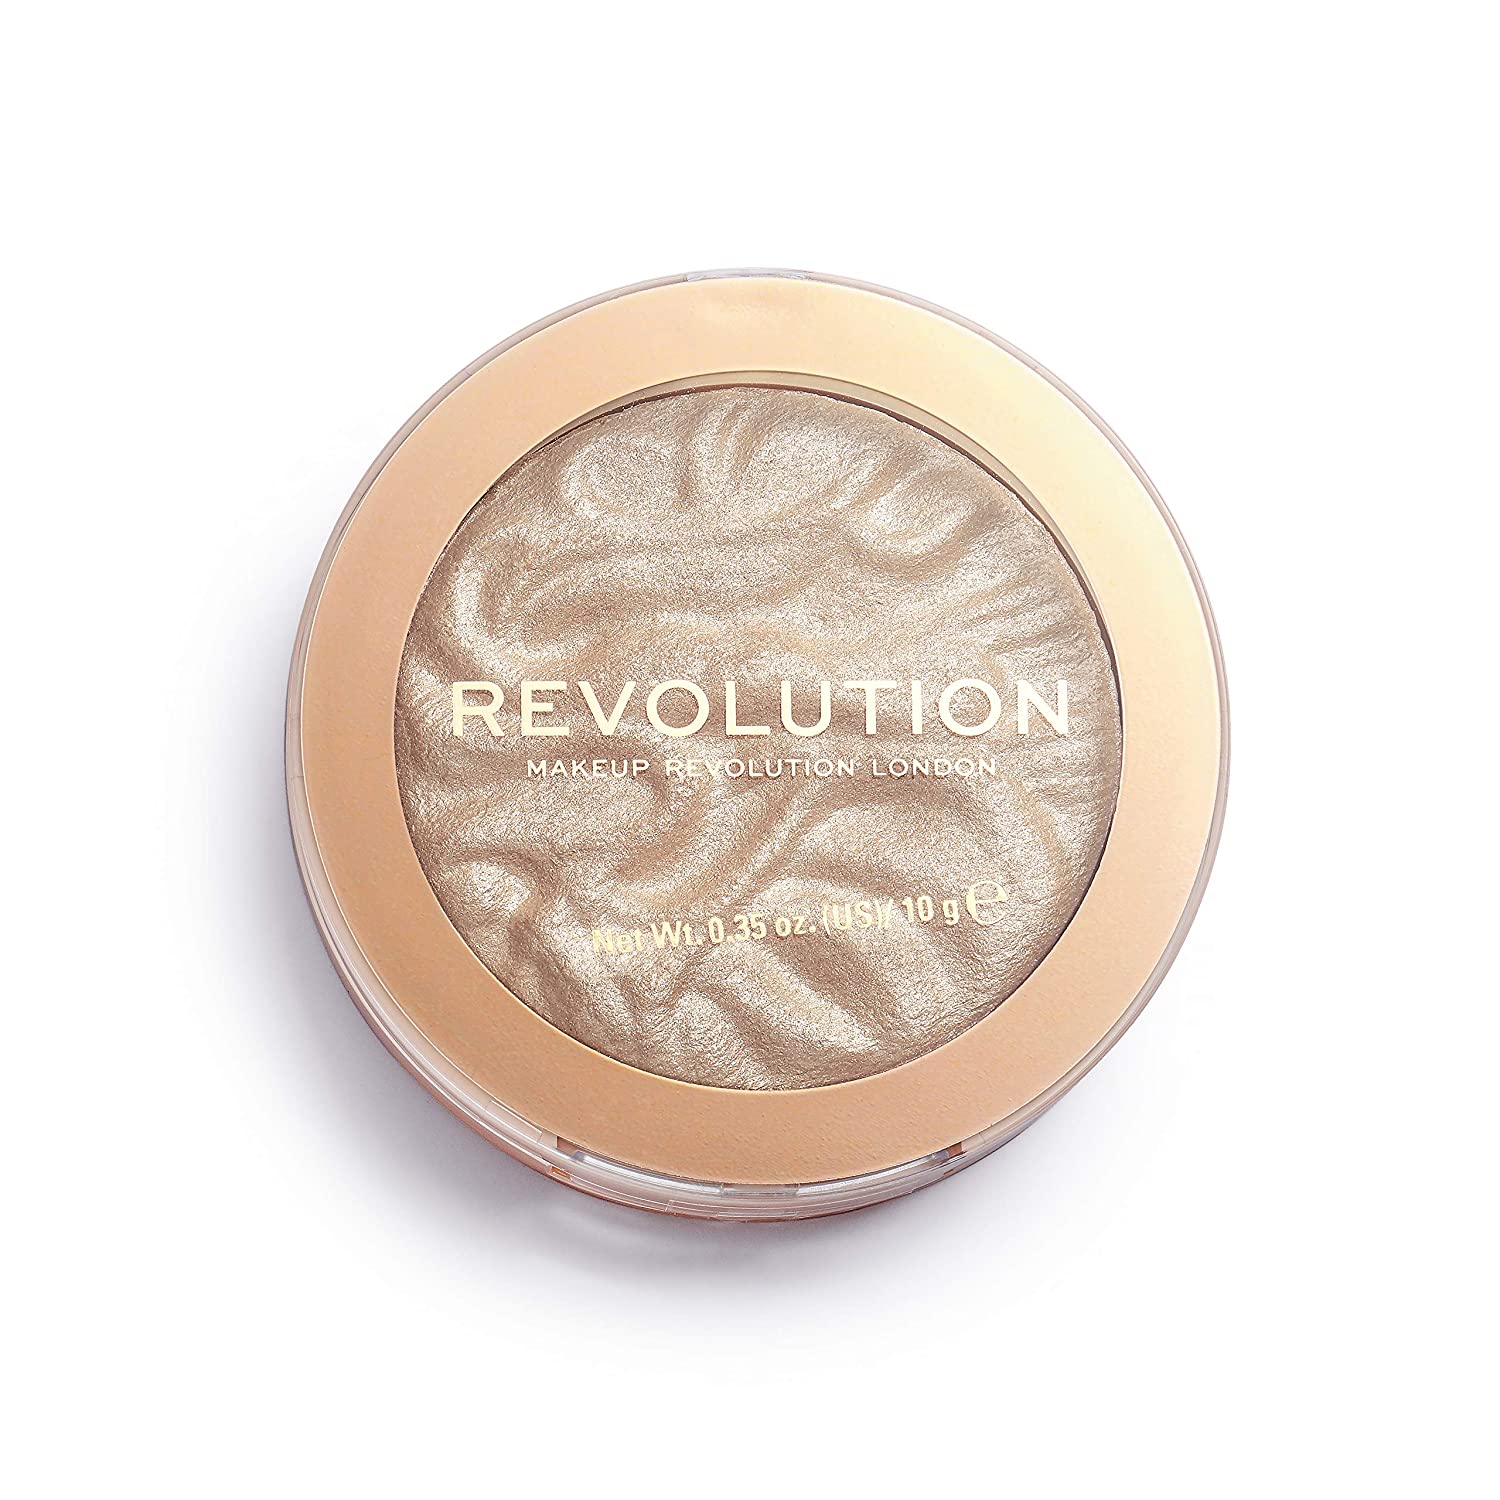 Makeup Revolution Reloaded Highlighter Just My Type, ‎just